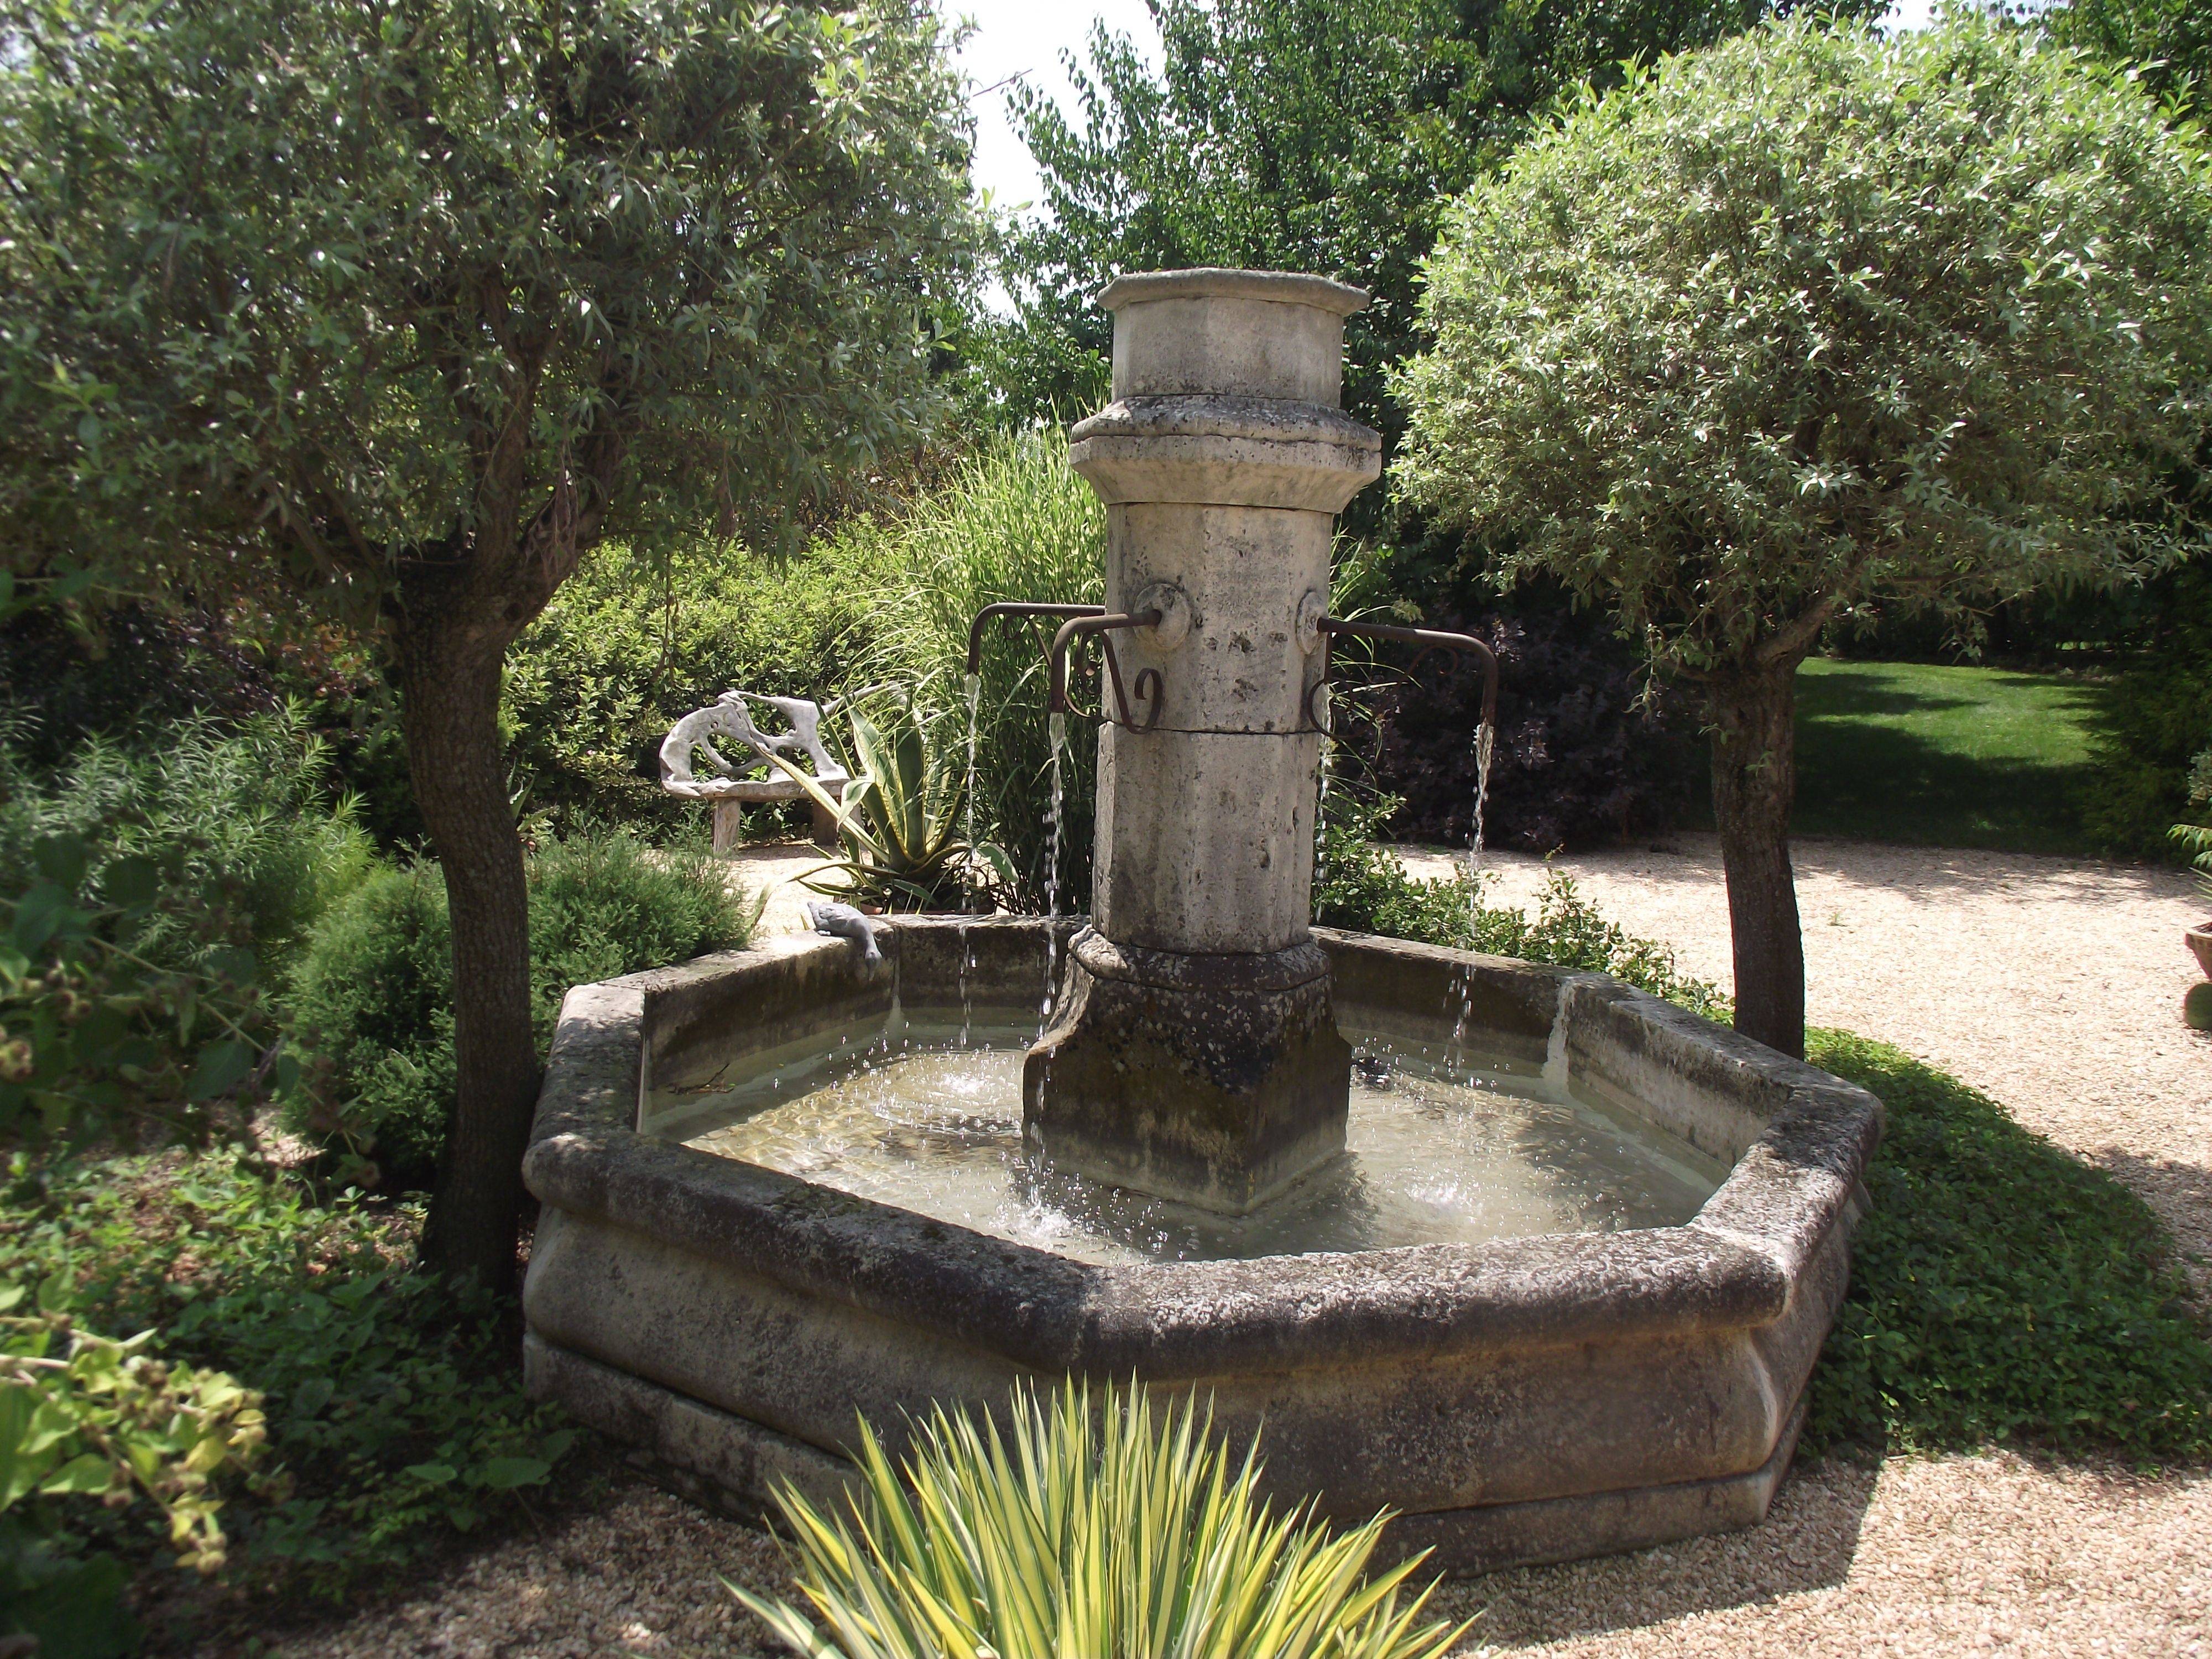 Antique Water Fountain Design Ideas